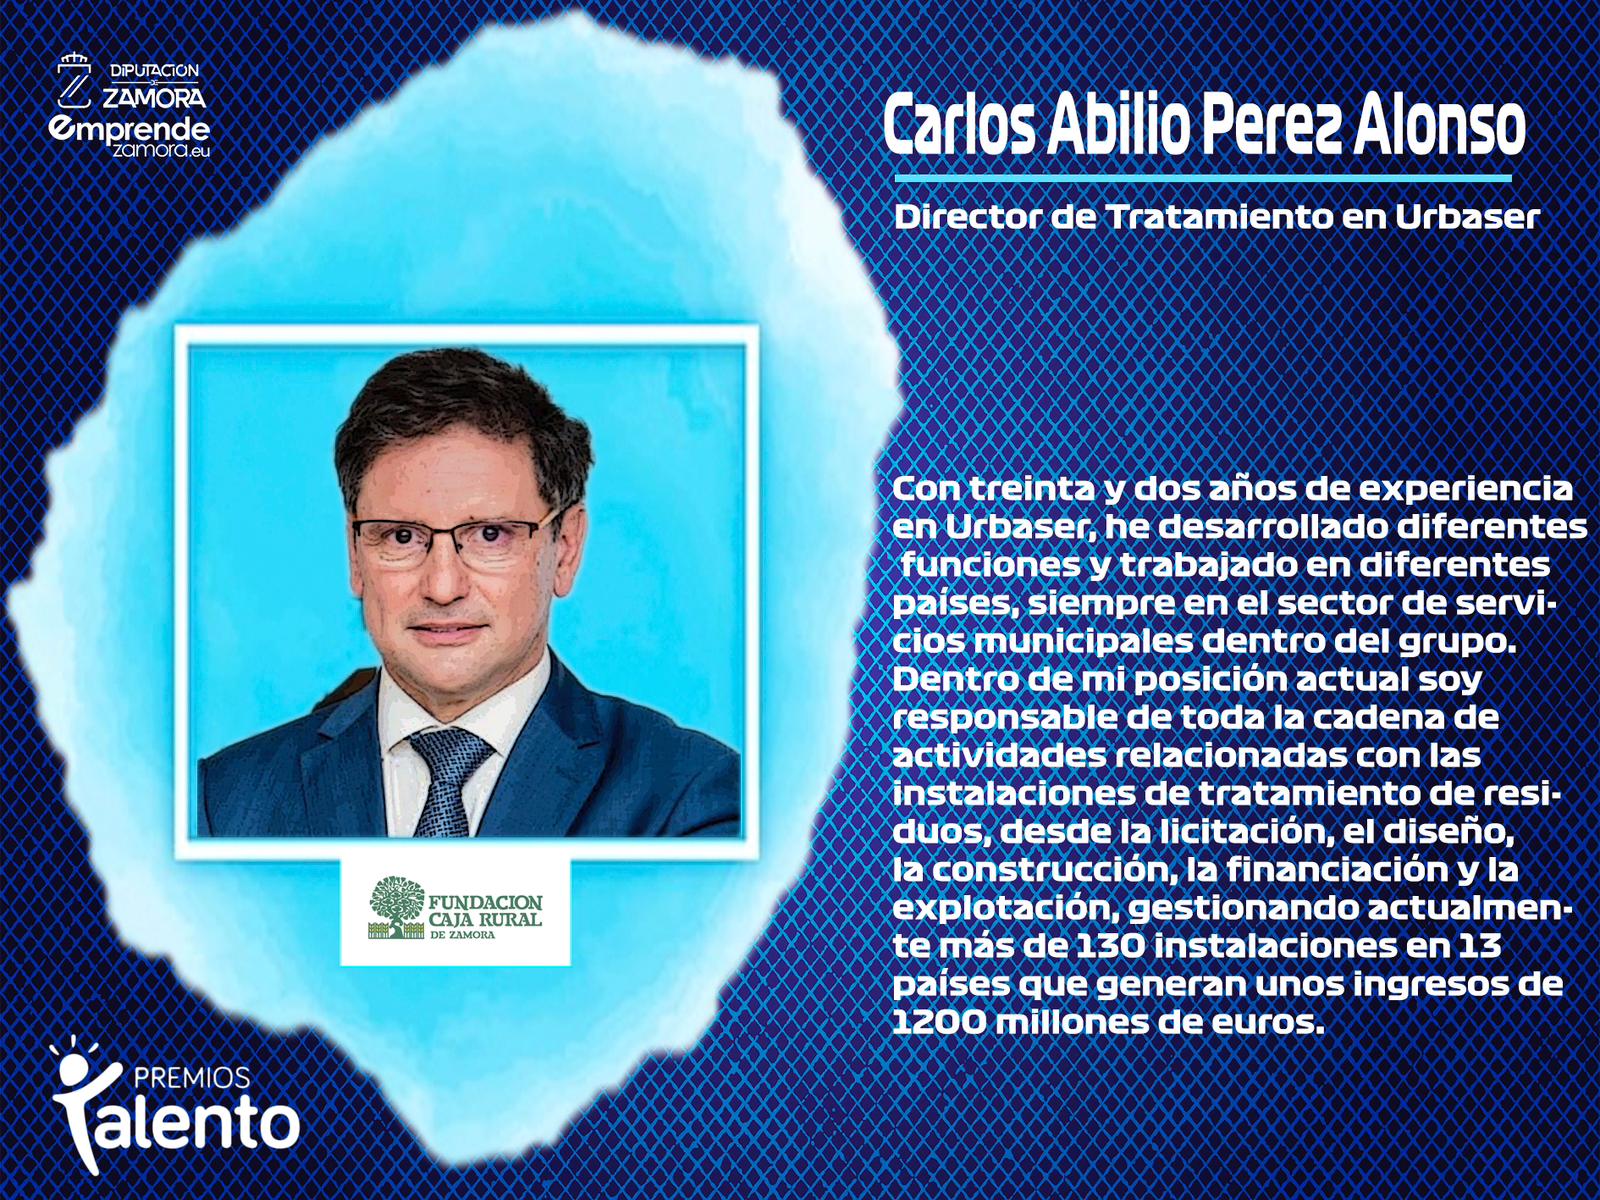 Carlos Abilio Pérez Alonso